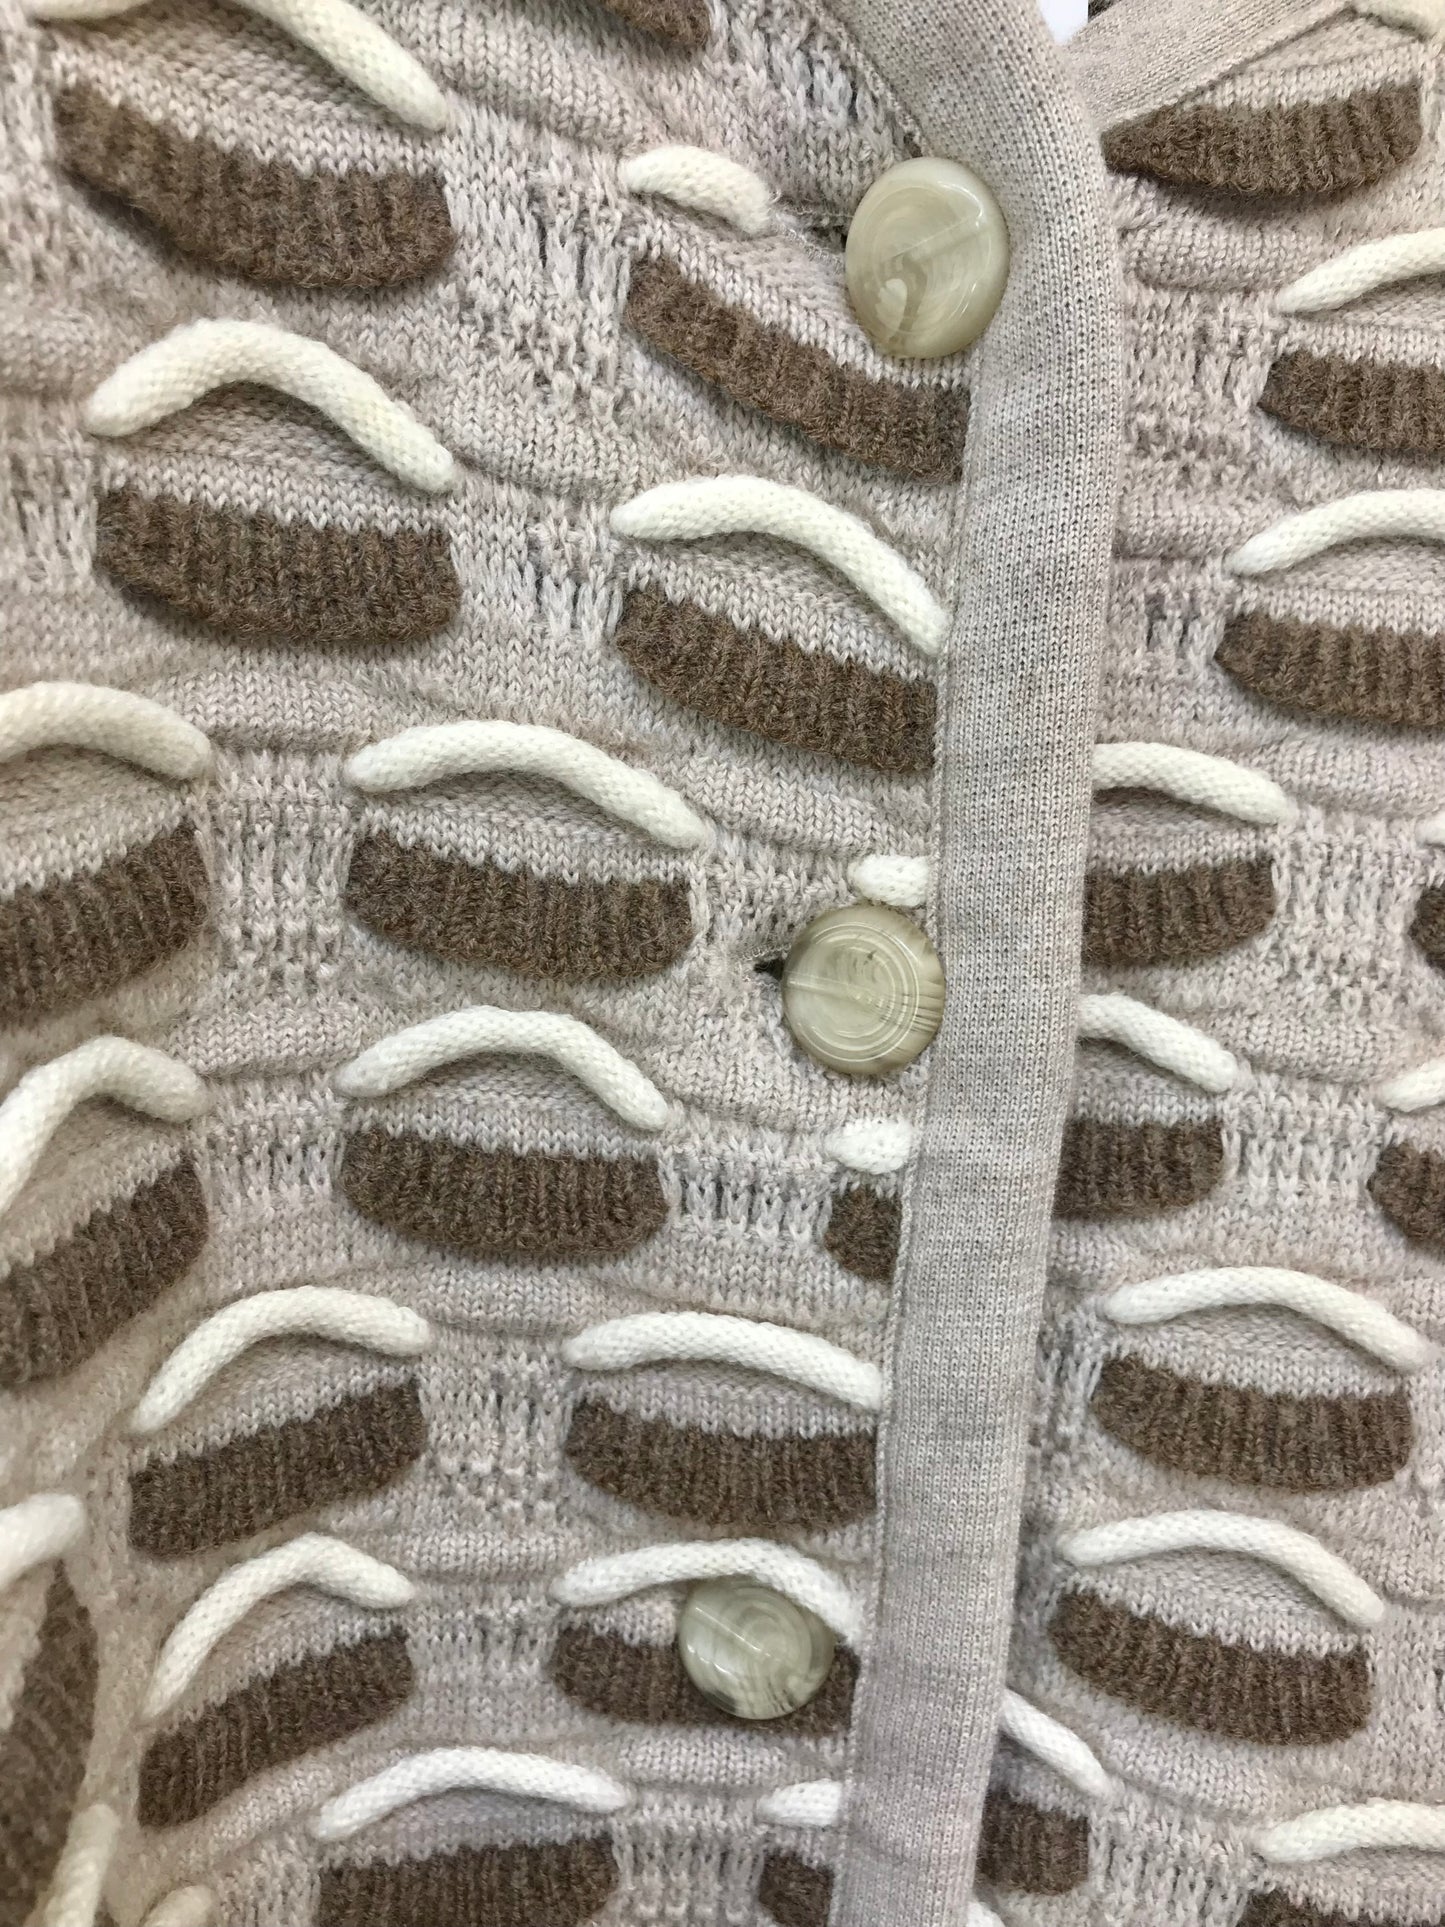 Vintage 3D Knit Sweater 〜MADE IN FRANCE〜 [K25436]